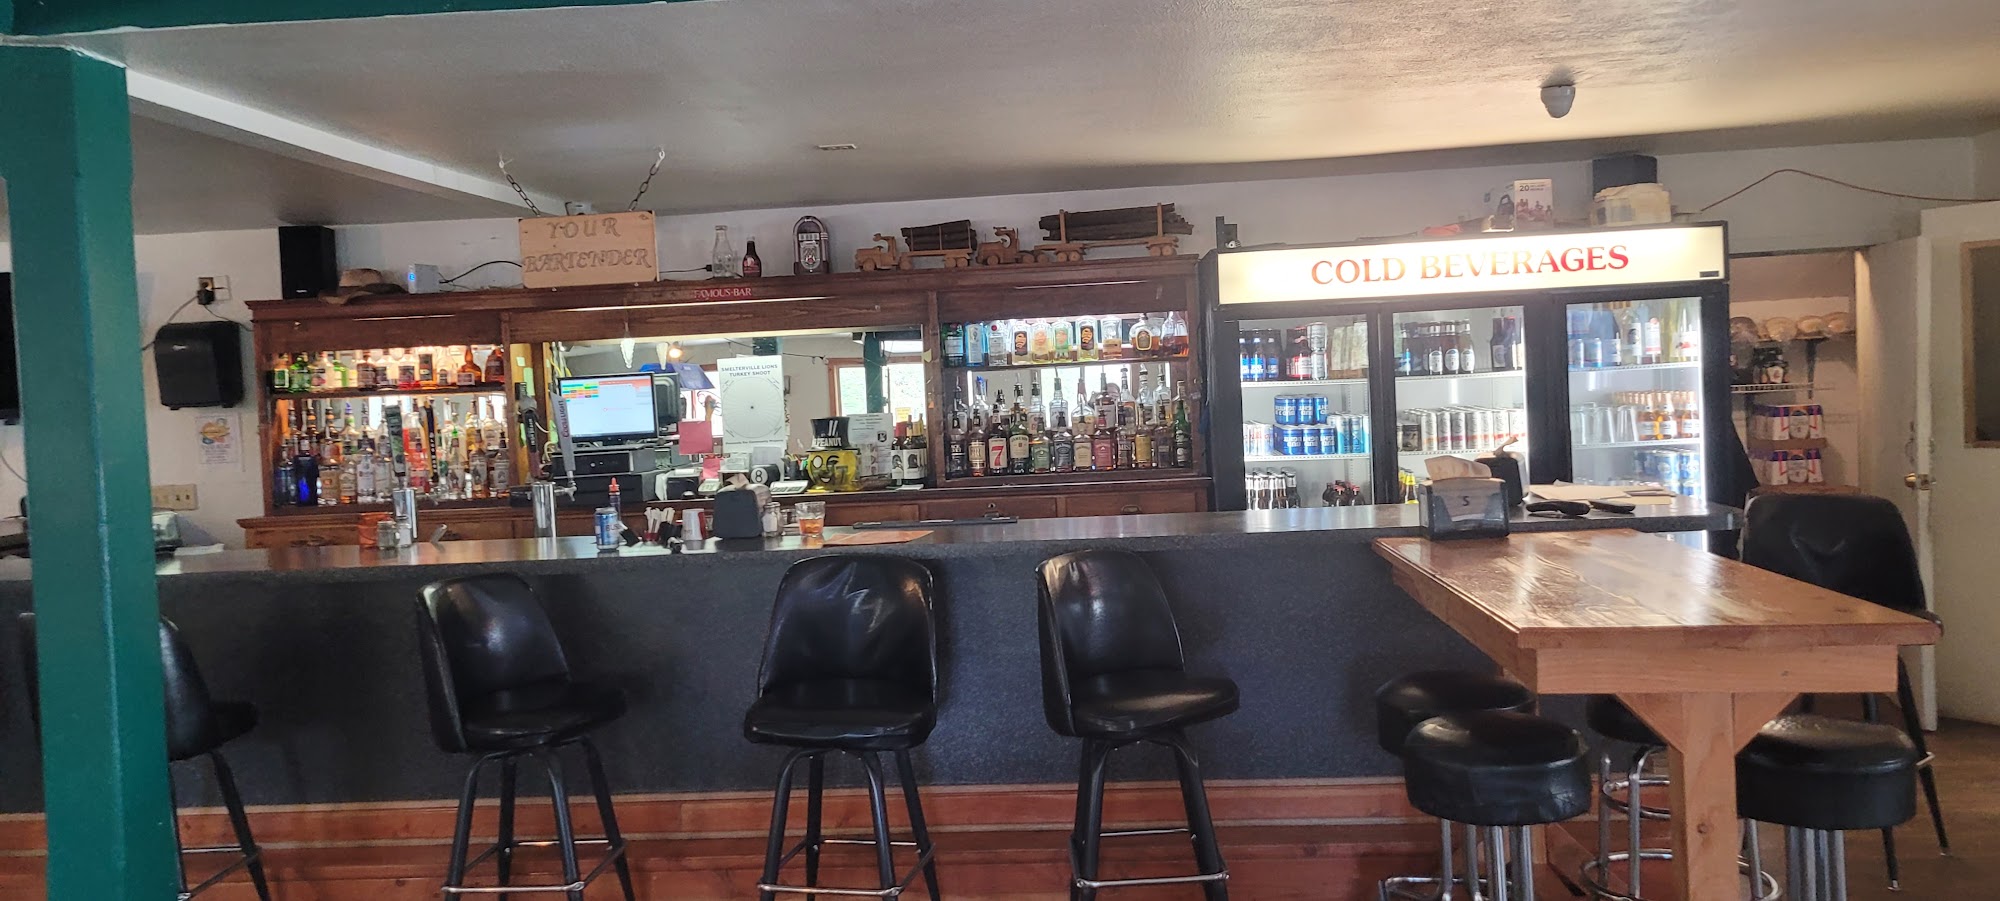 Pinecreek Tavern/ Bar and Restaurant